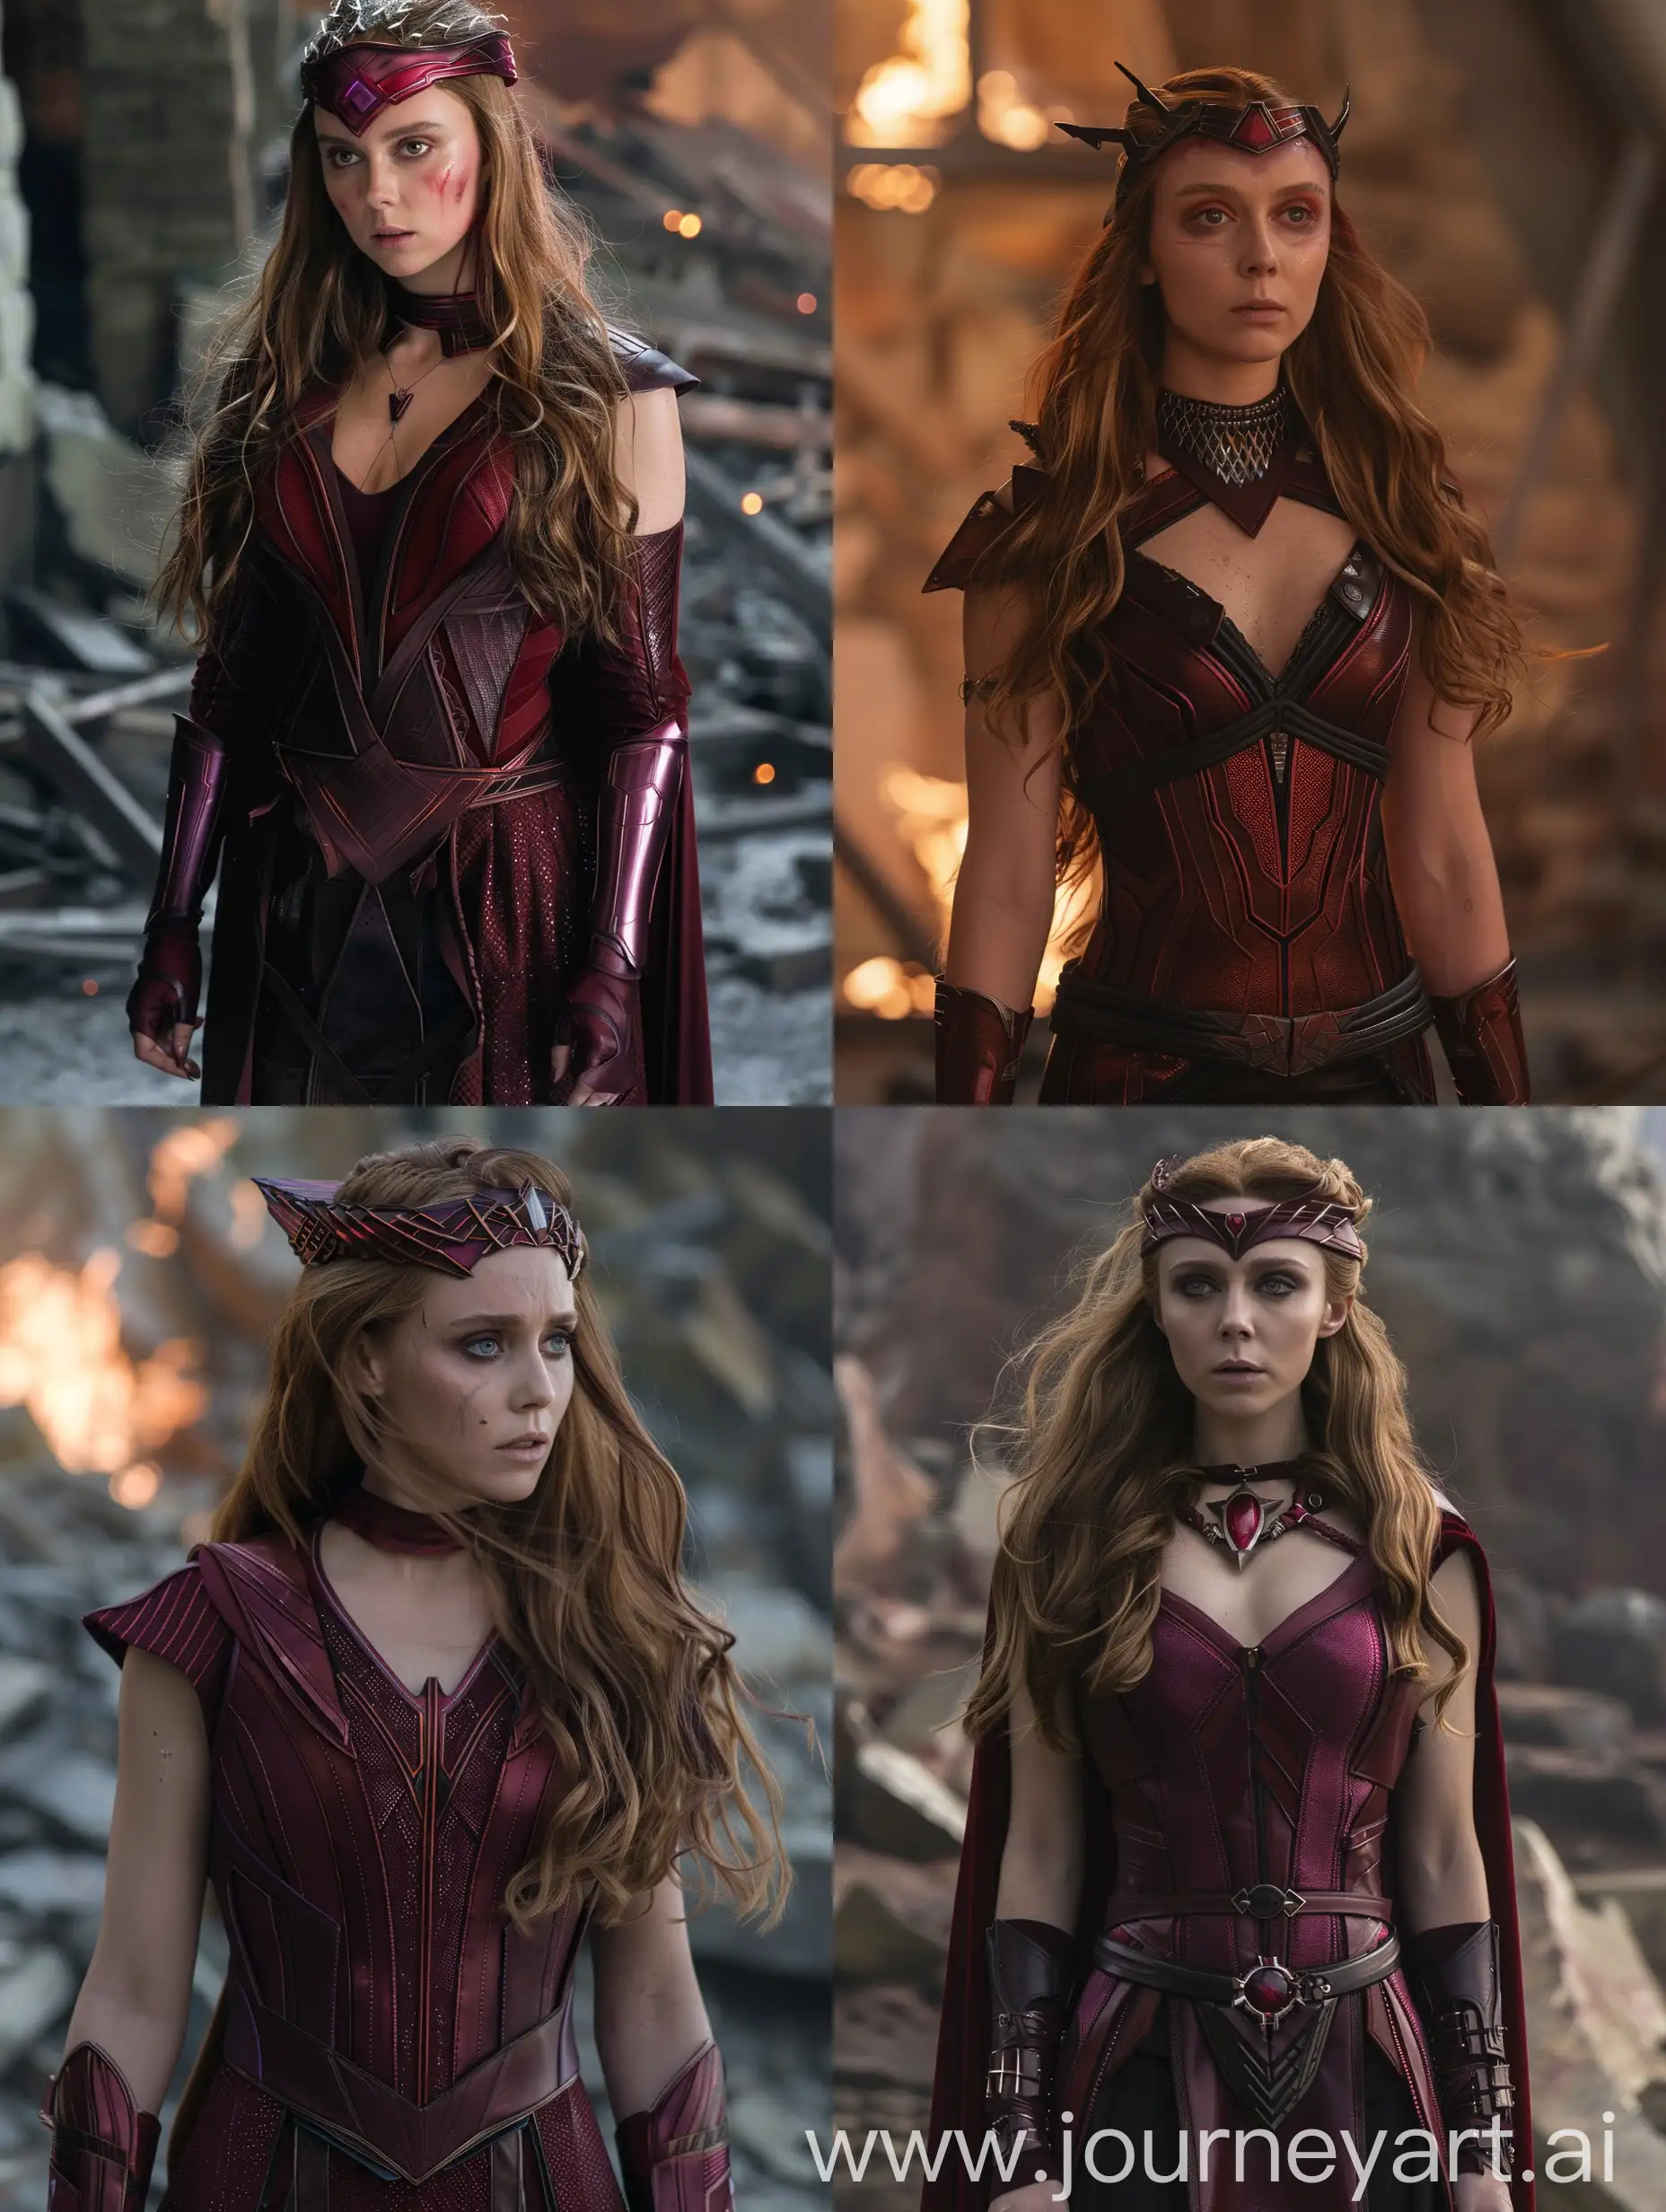 Elizabeth-Olsen-as-Scarlet-Witch-Avengers-Endgame-Costume-Portrait